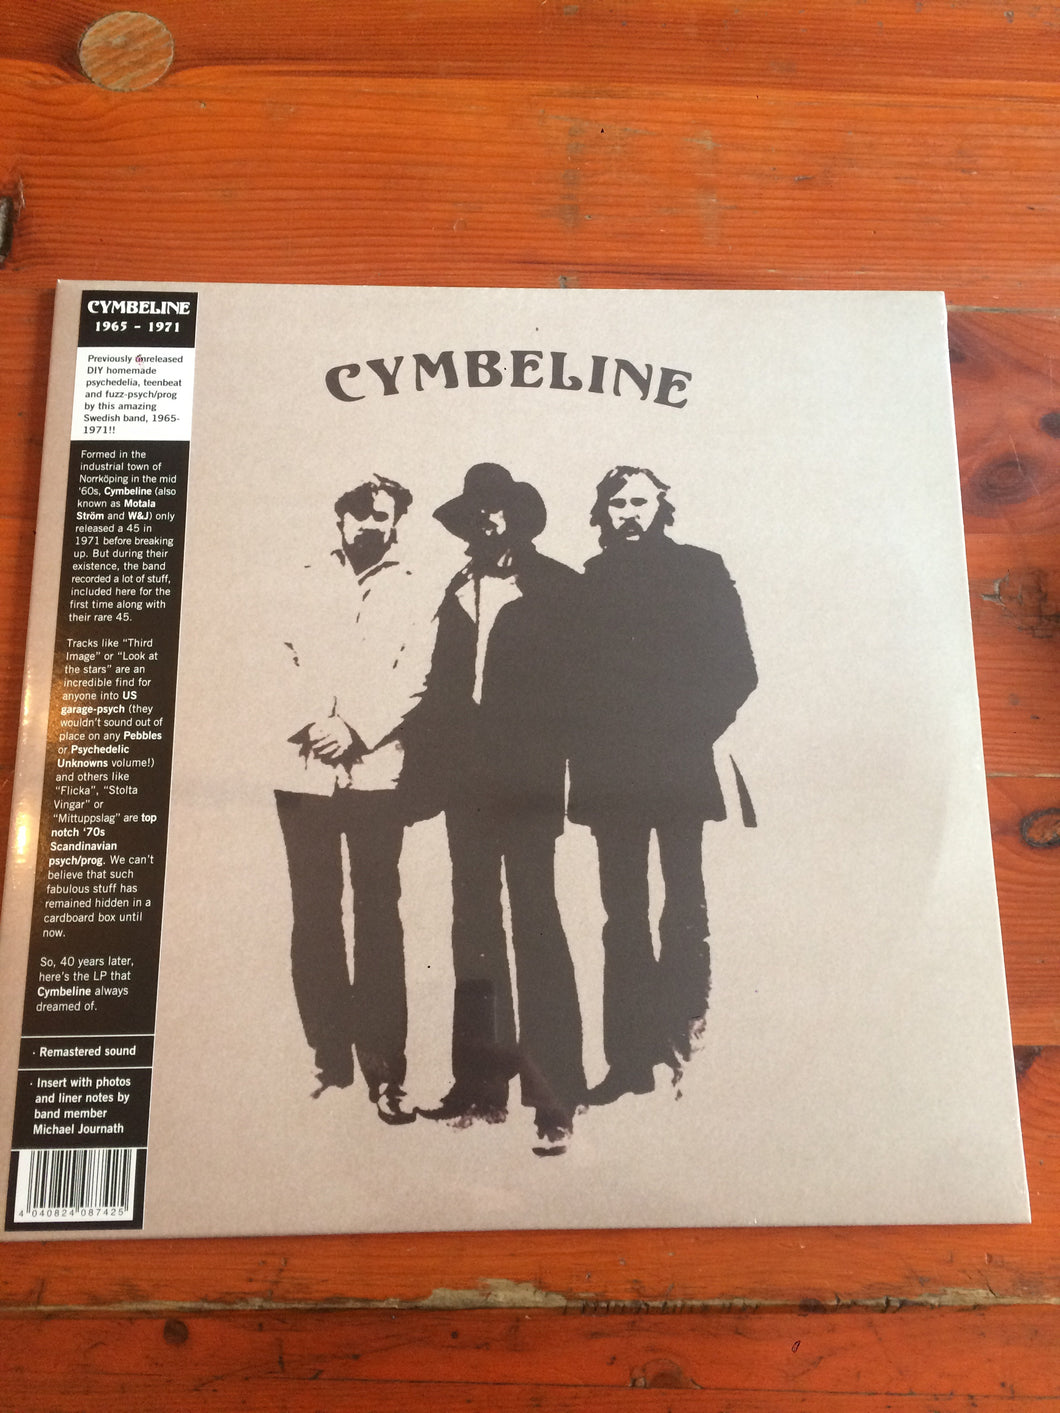 Cymbeline - 1965 - 1971